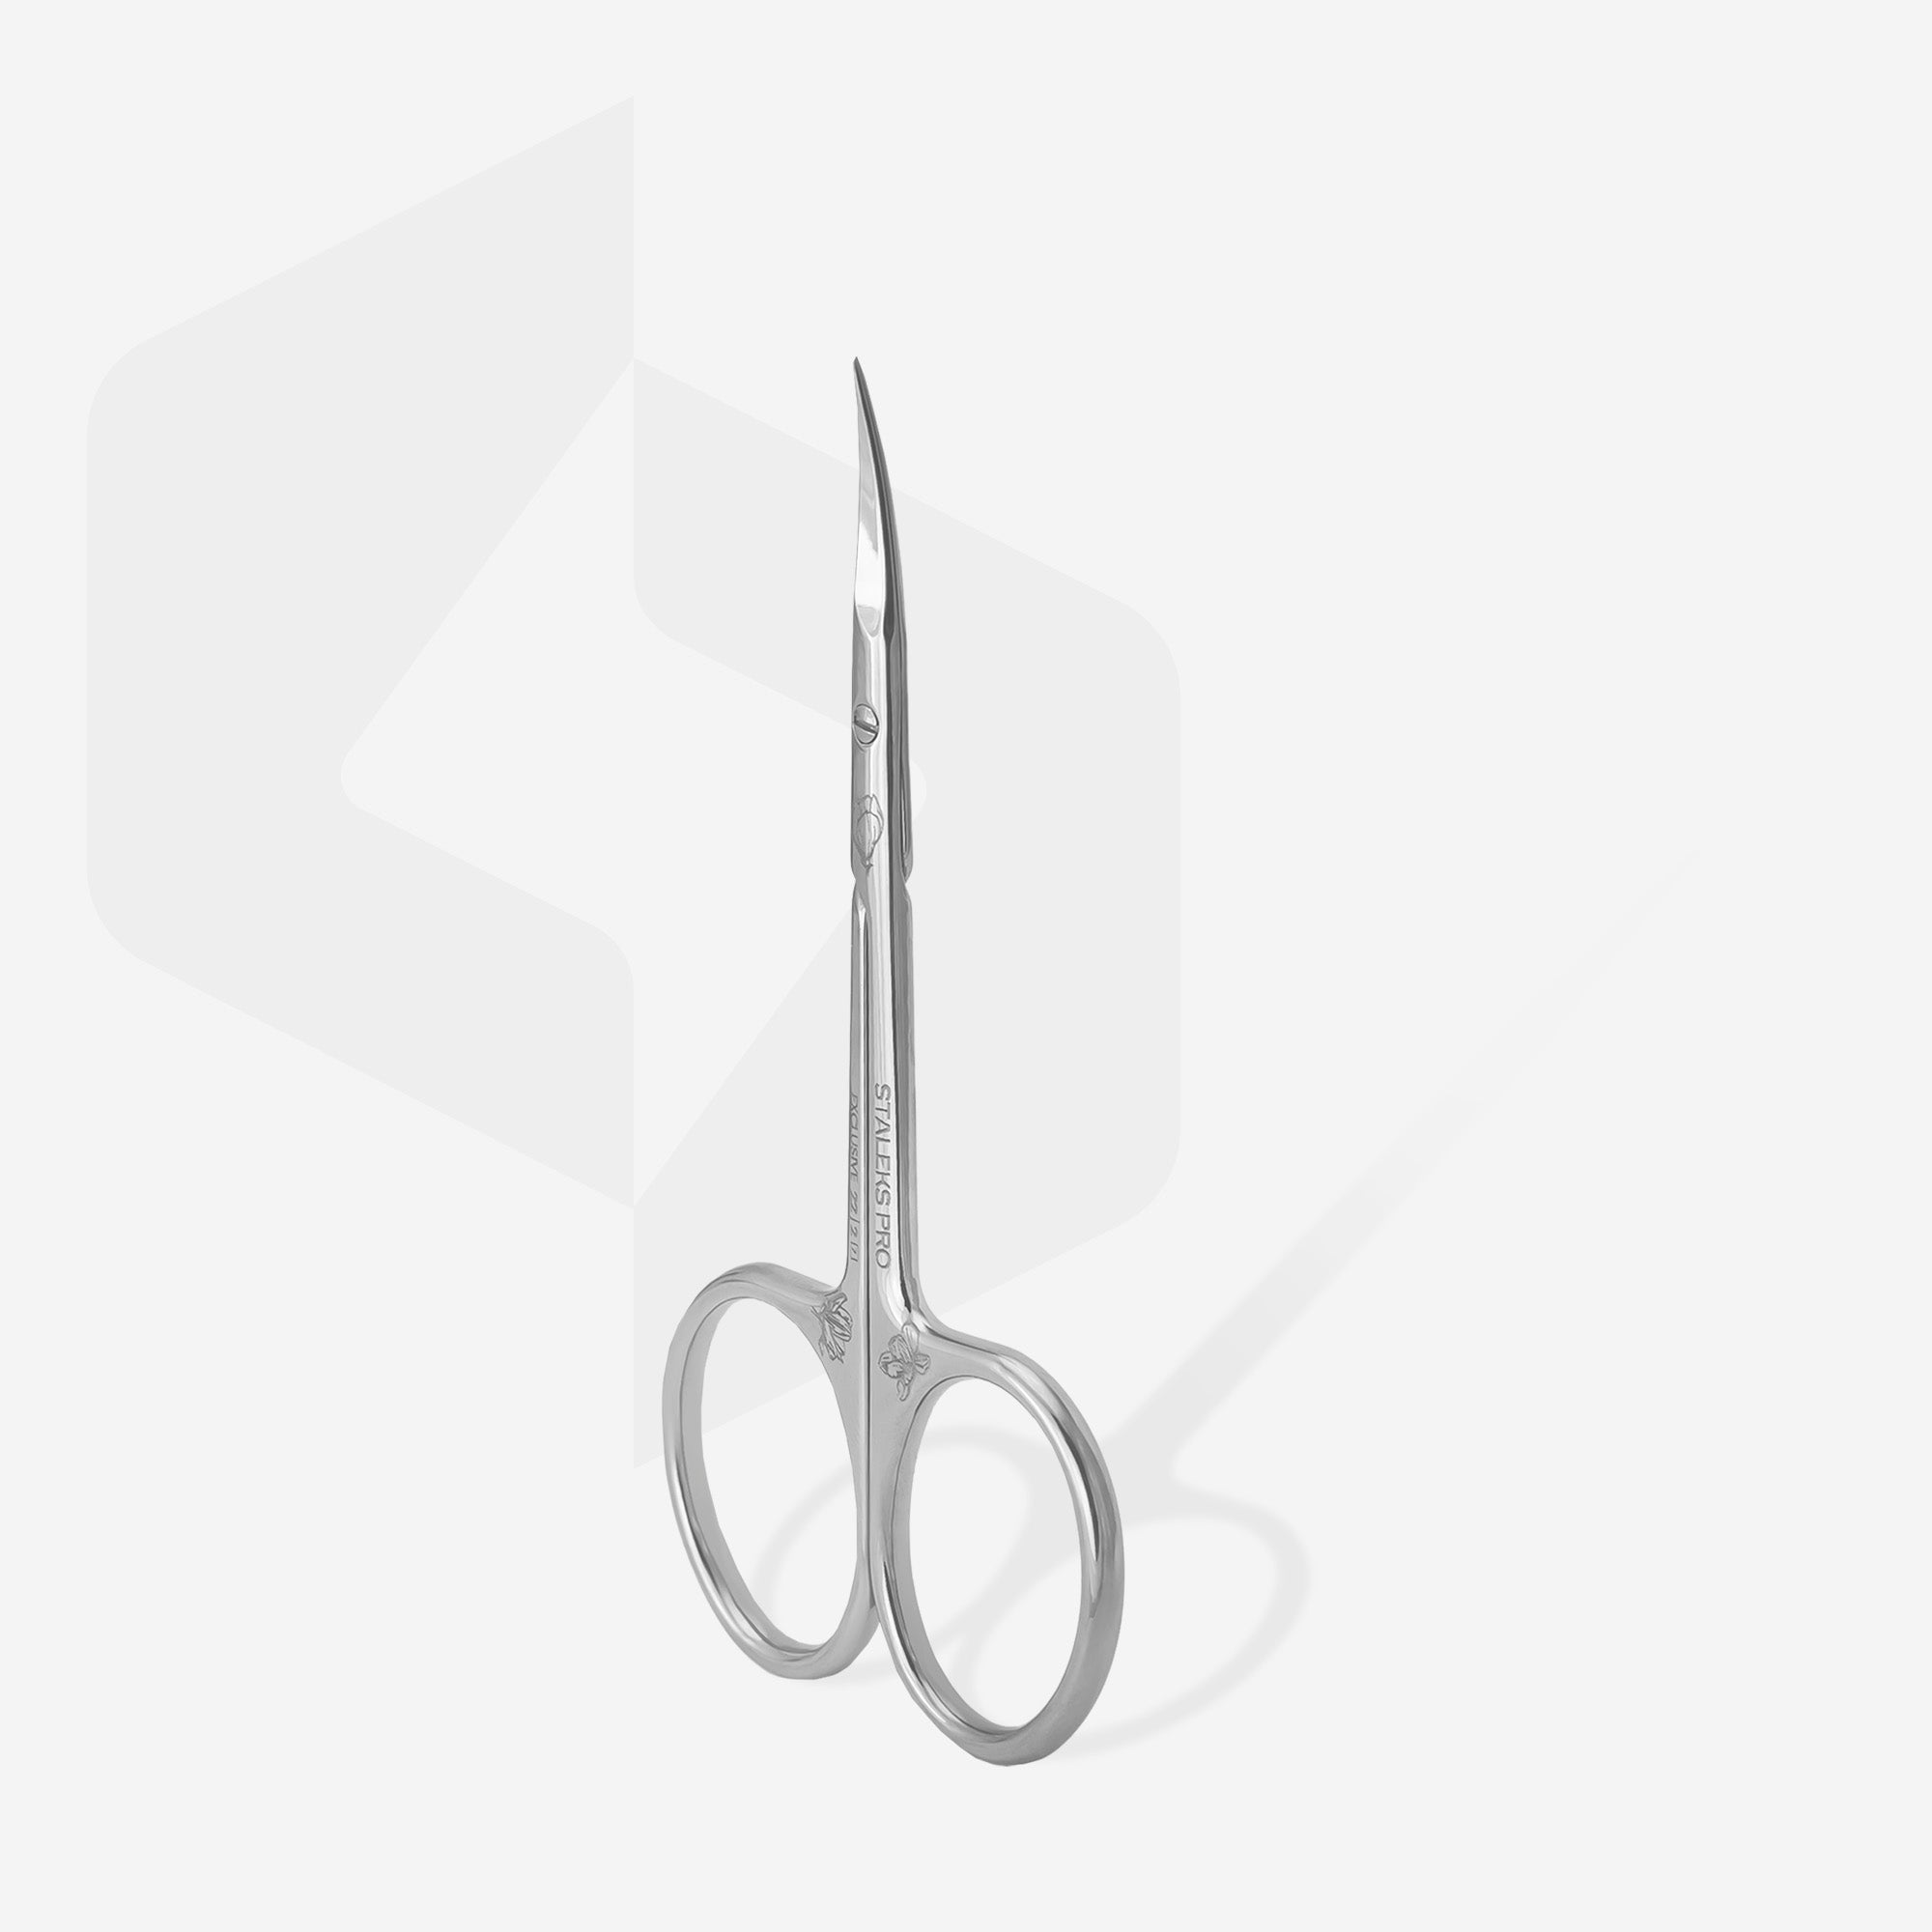 Staleks Pro Cuticle Scissors - Exclusive